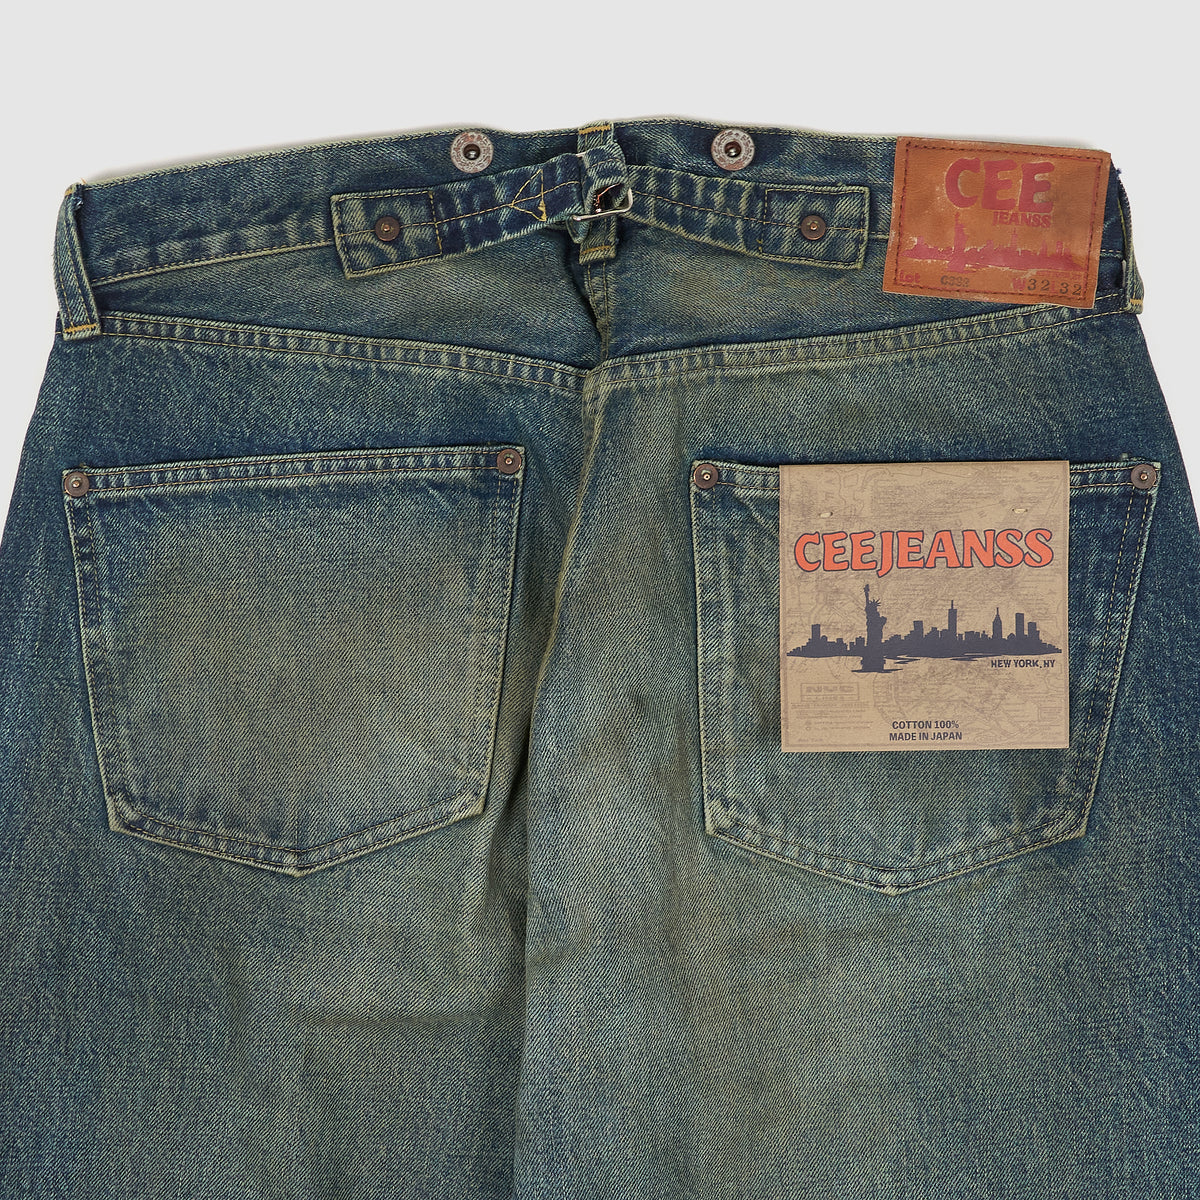 CEE Jeanss 5 Pocket 1920&#39;s Inspired Straight Leg Denim